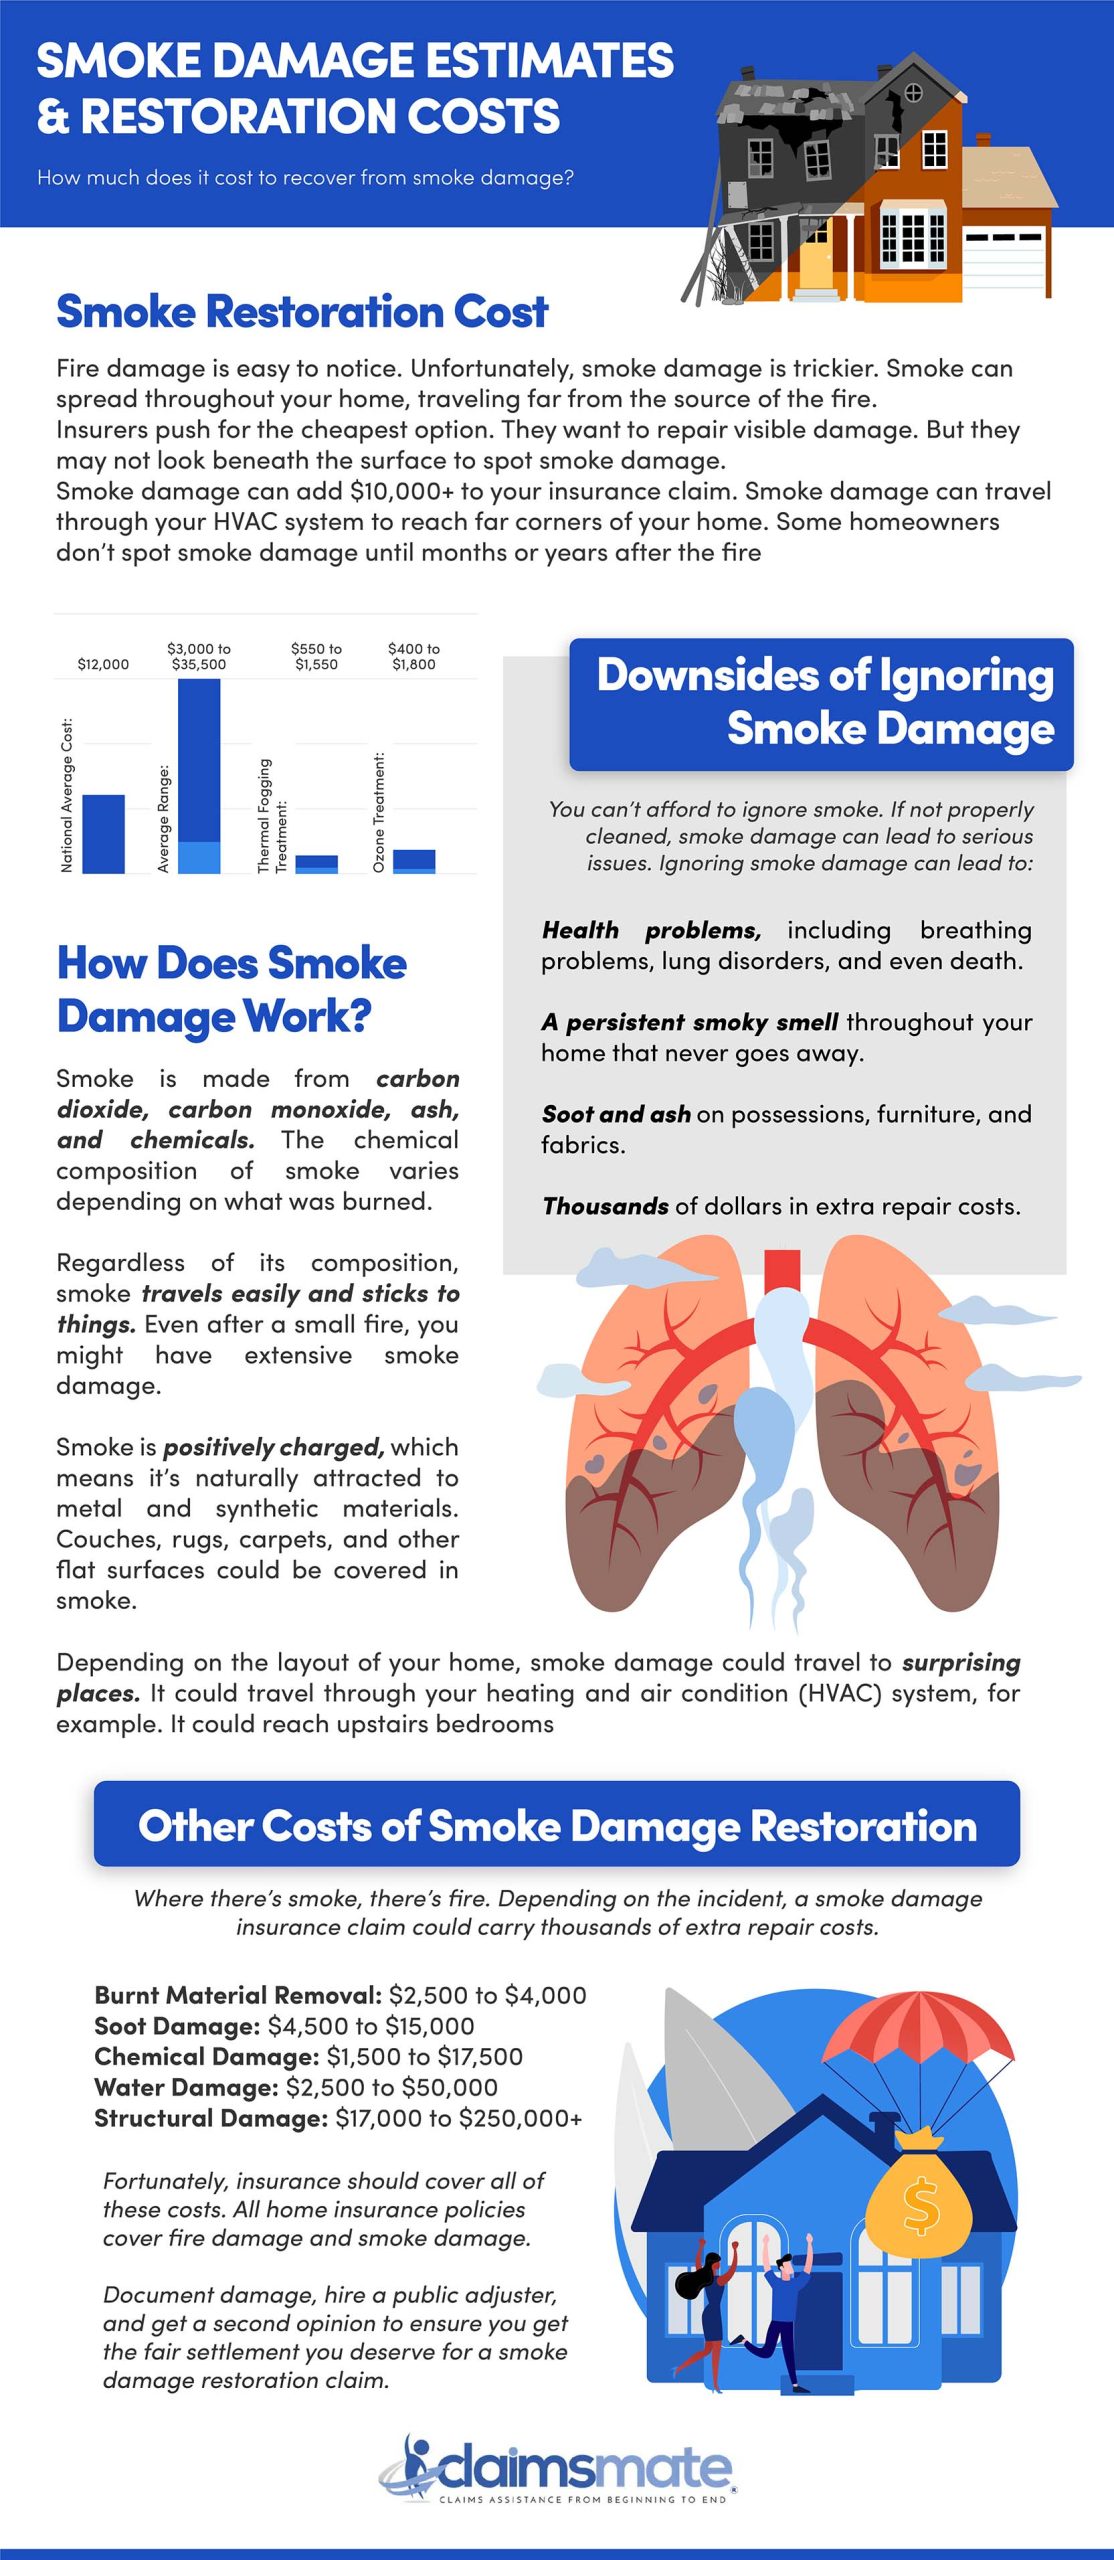 Smoke Damage Estimates & Restoration Costs Infographic